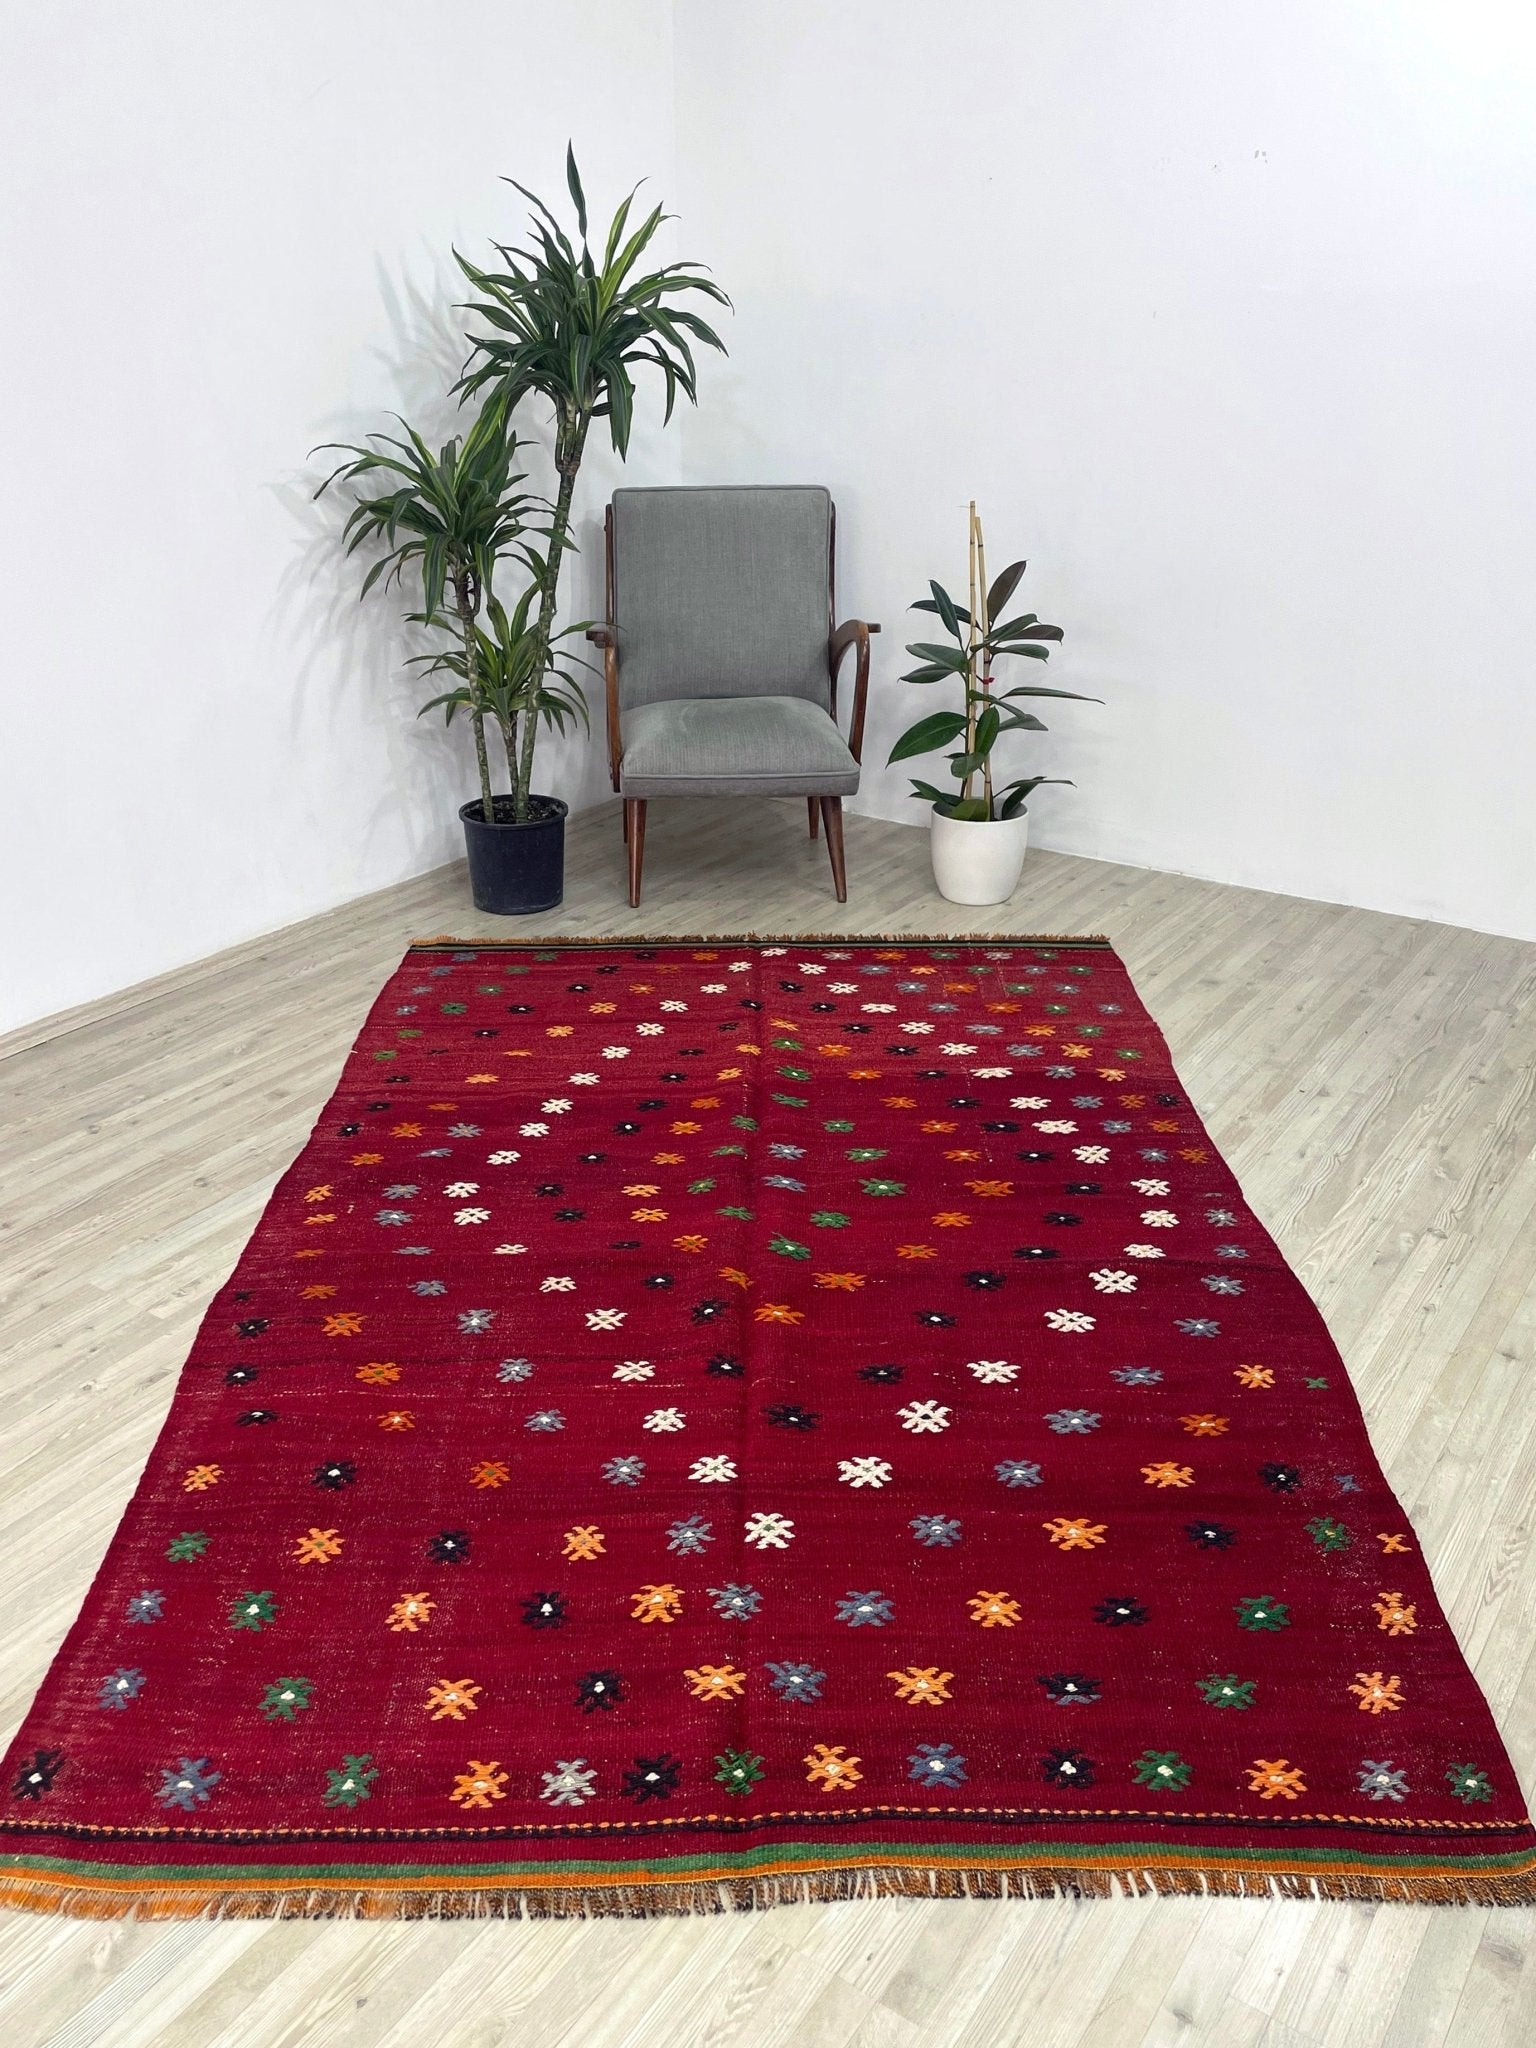 pergamum turkşsh kilim rug shop san francisco bay area berkeley palo alto but rug online shopping